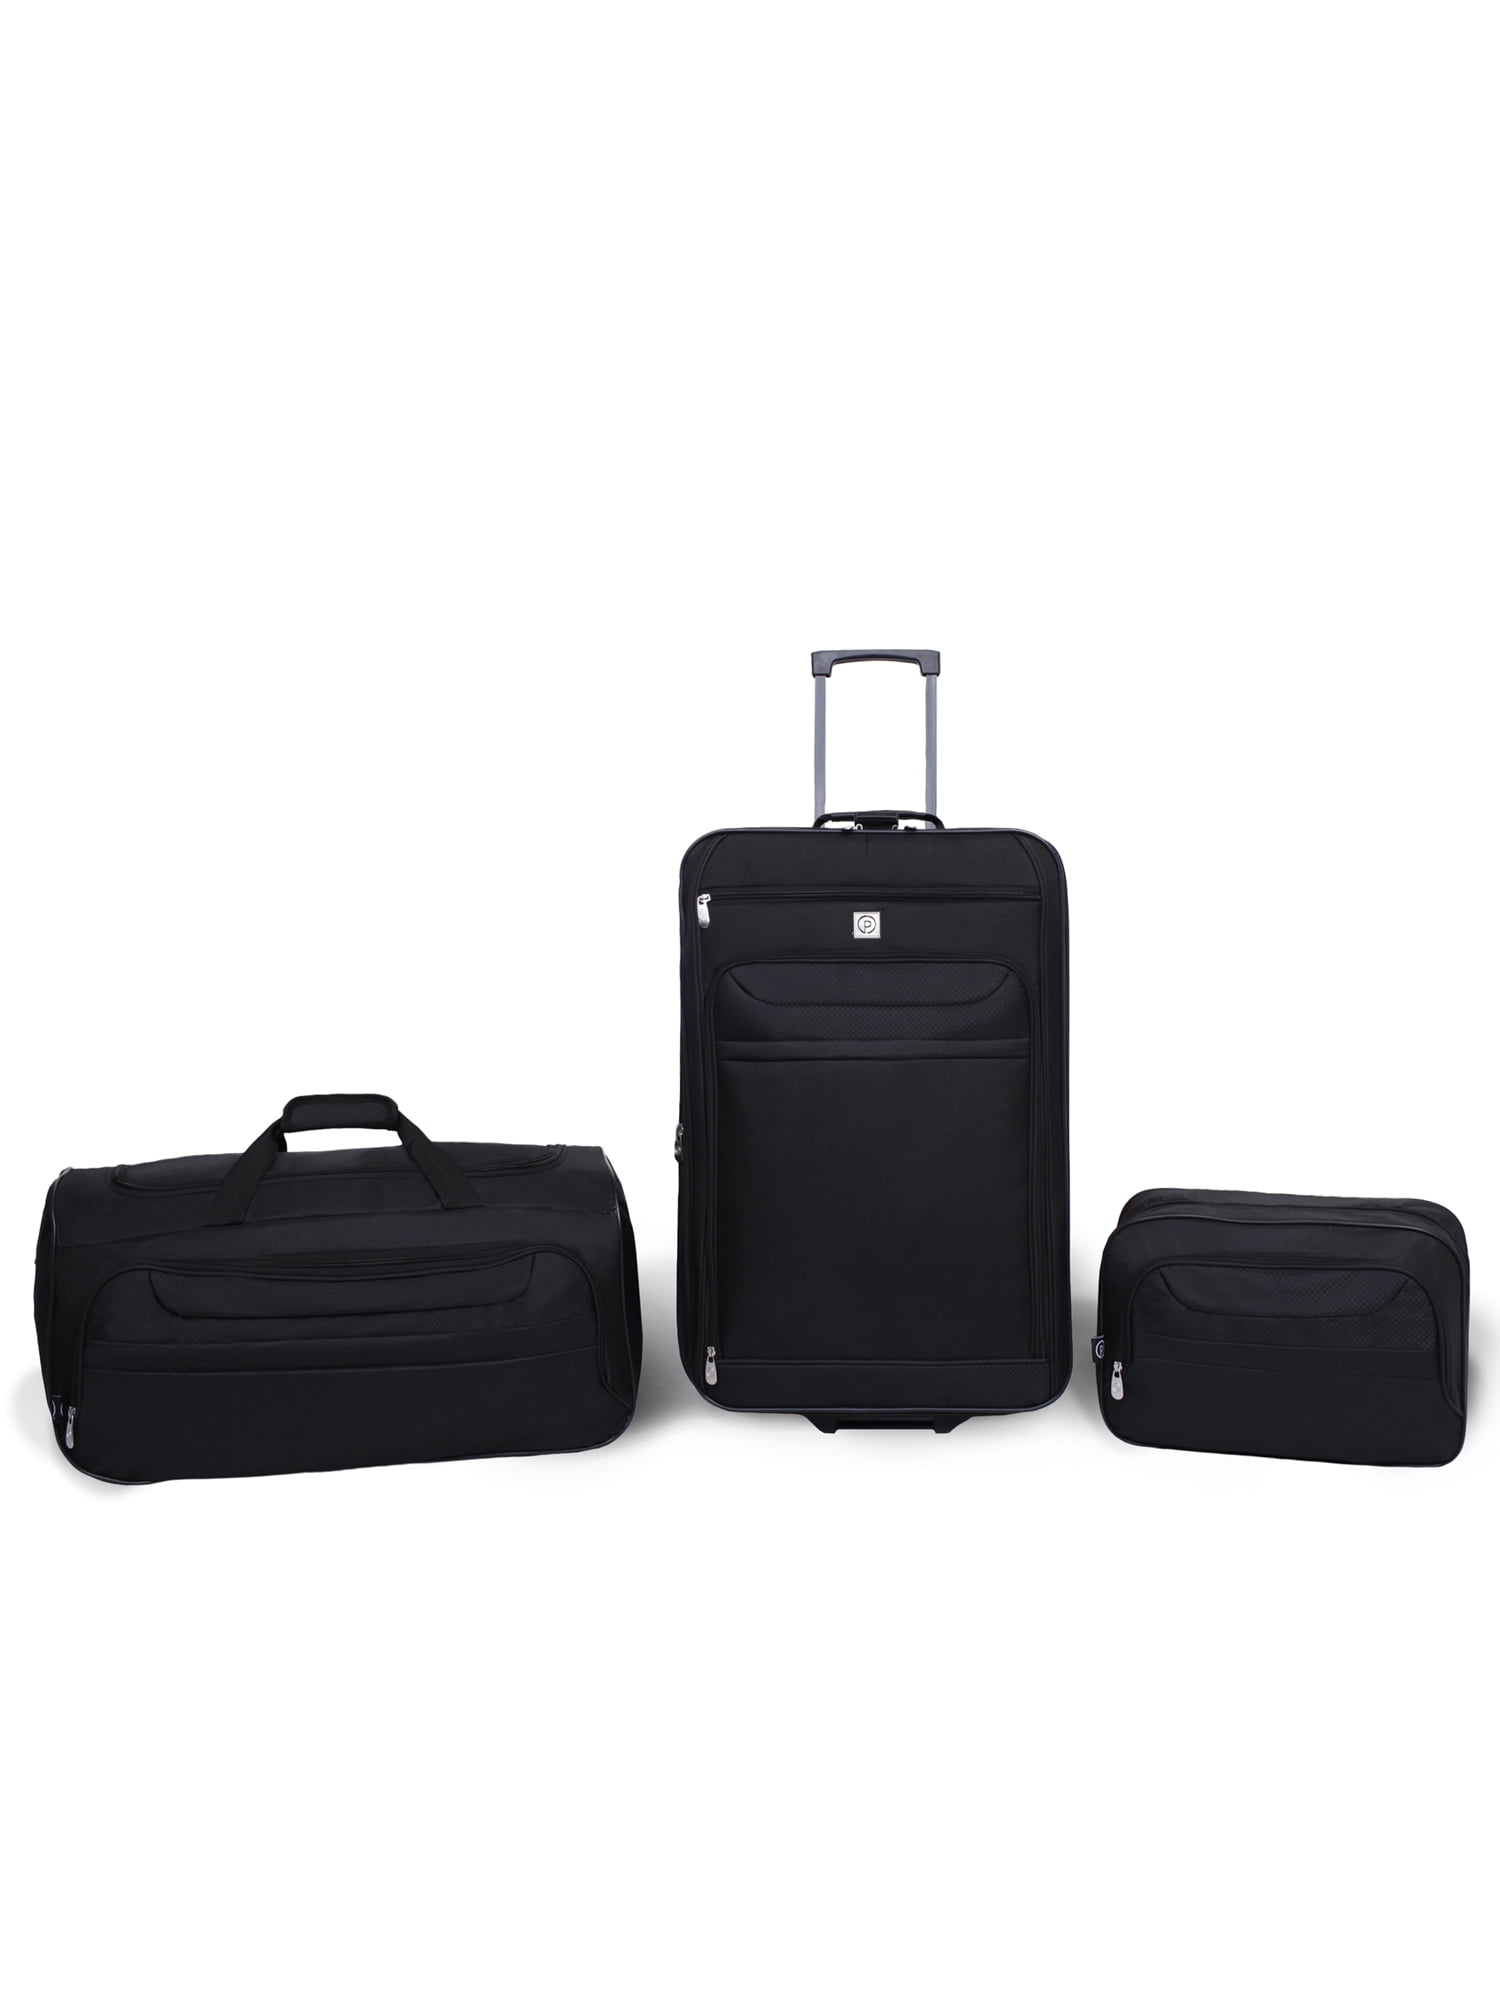 Delta 3 Piece Black PC Luggage Set (28/24/20) - Shop1913 by RG Apparel Co.